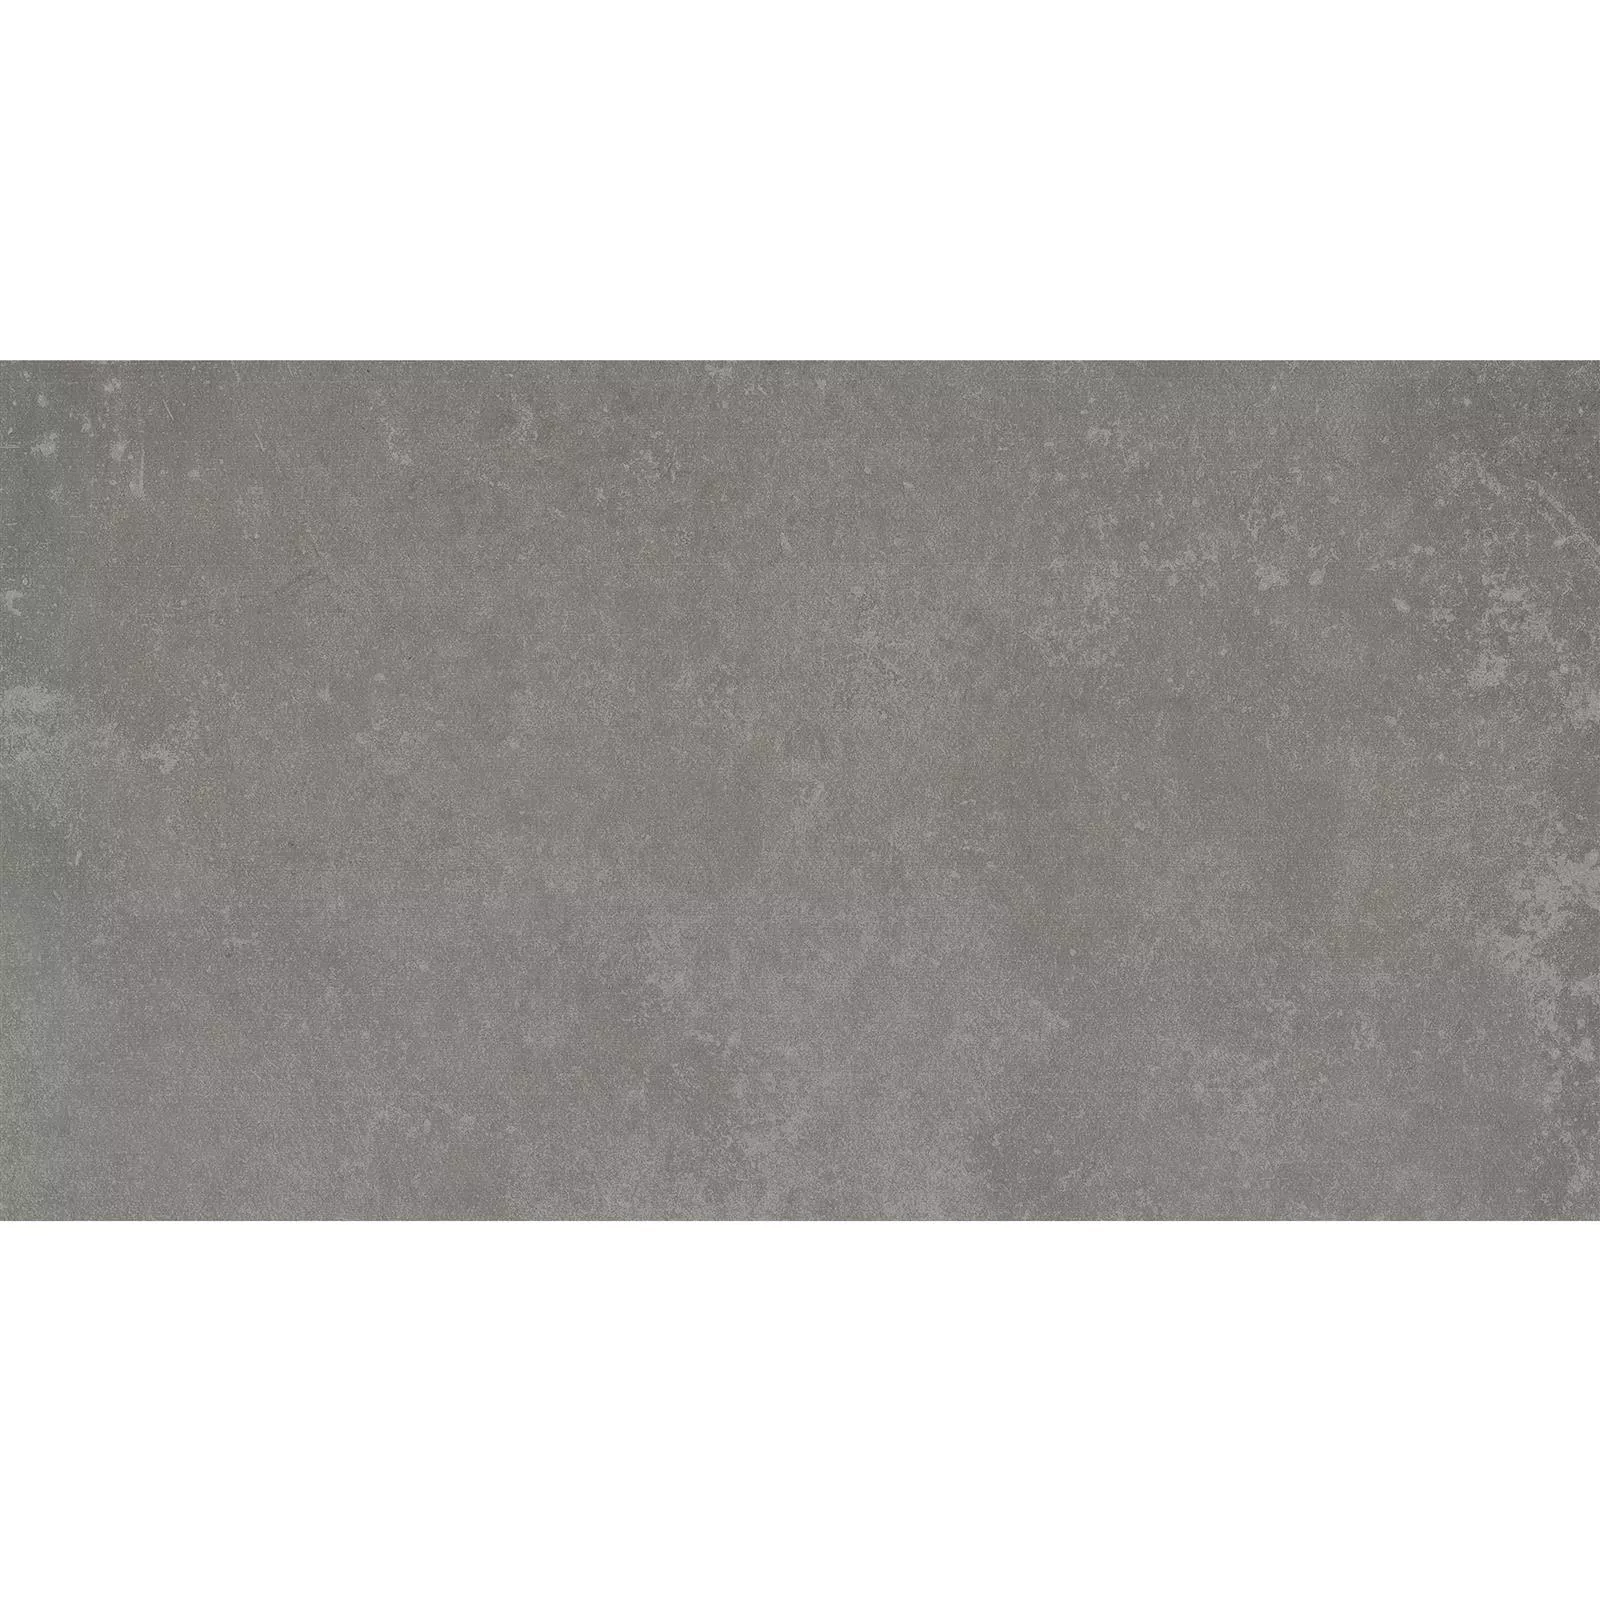 Muster Bodenfliesen Nepal Grau Beige 30x60x0,7cm